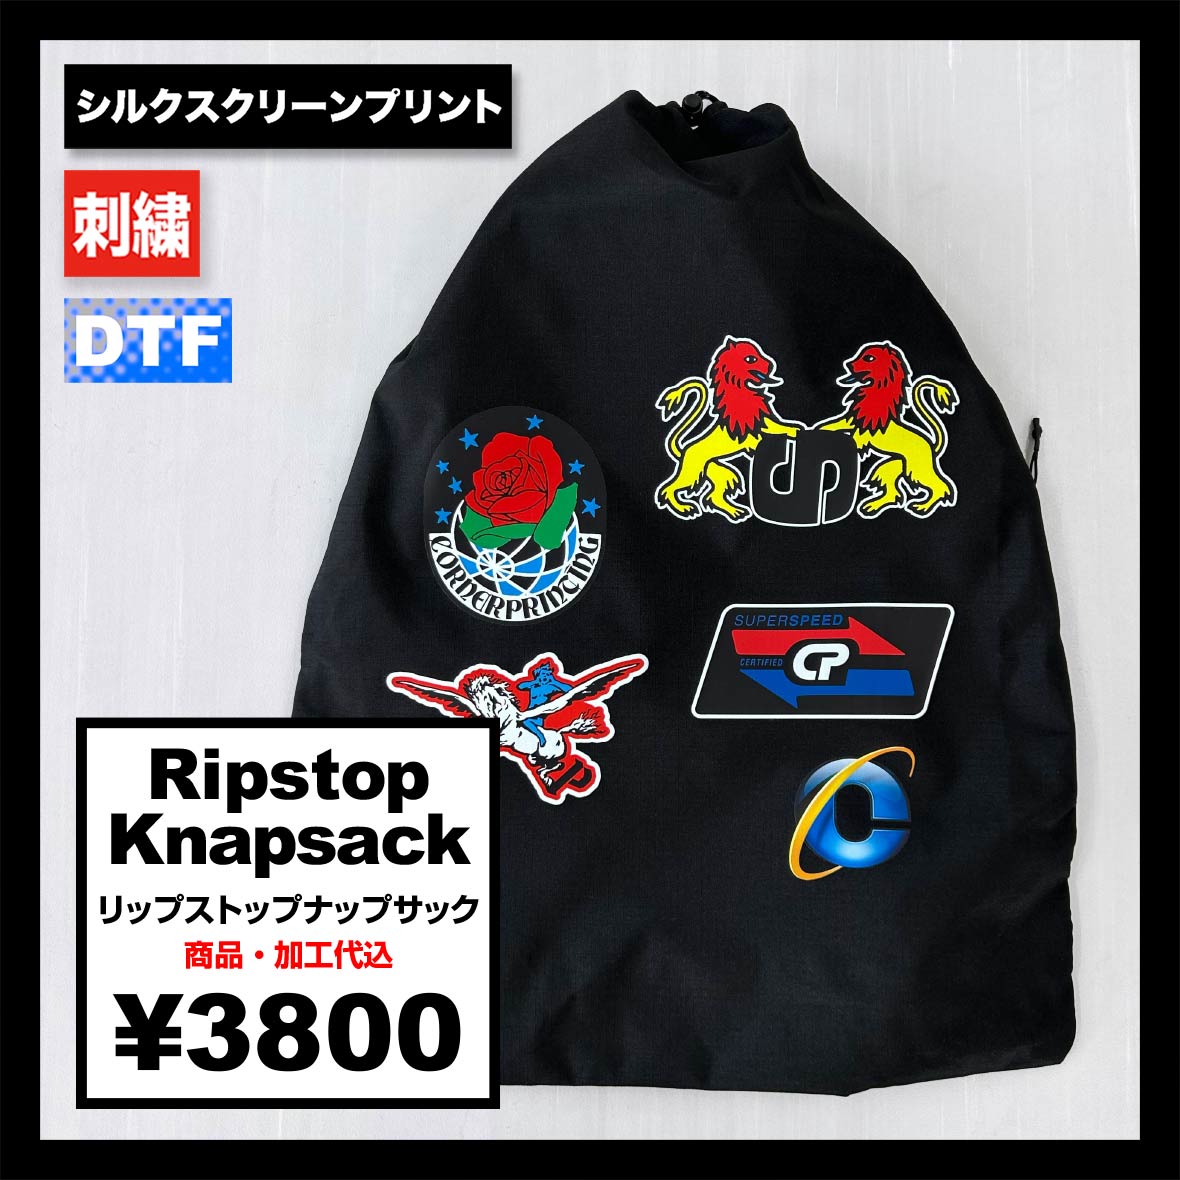 Ripstop Knapsack リップストップナップサック (品番CP040)